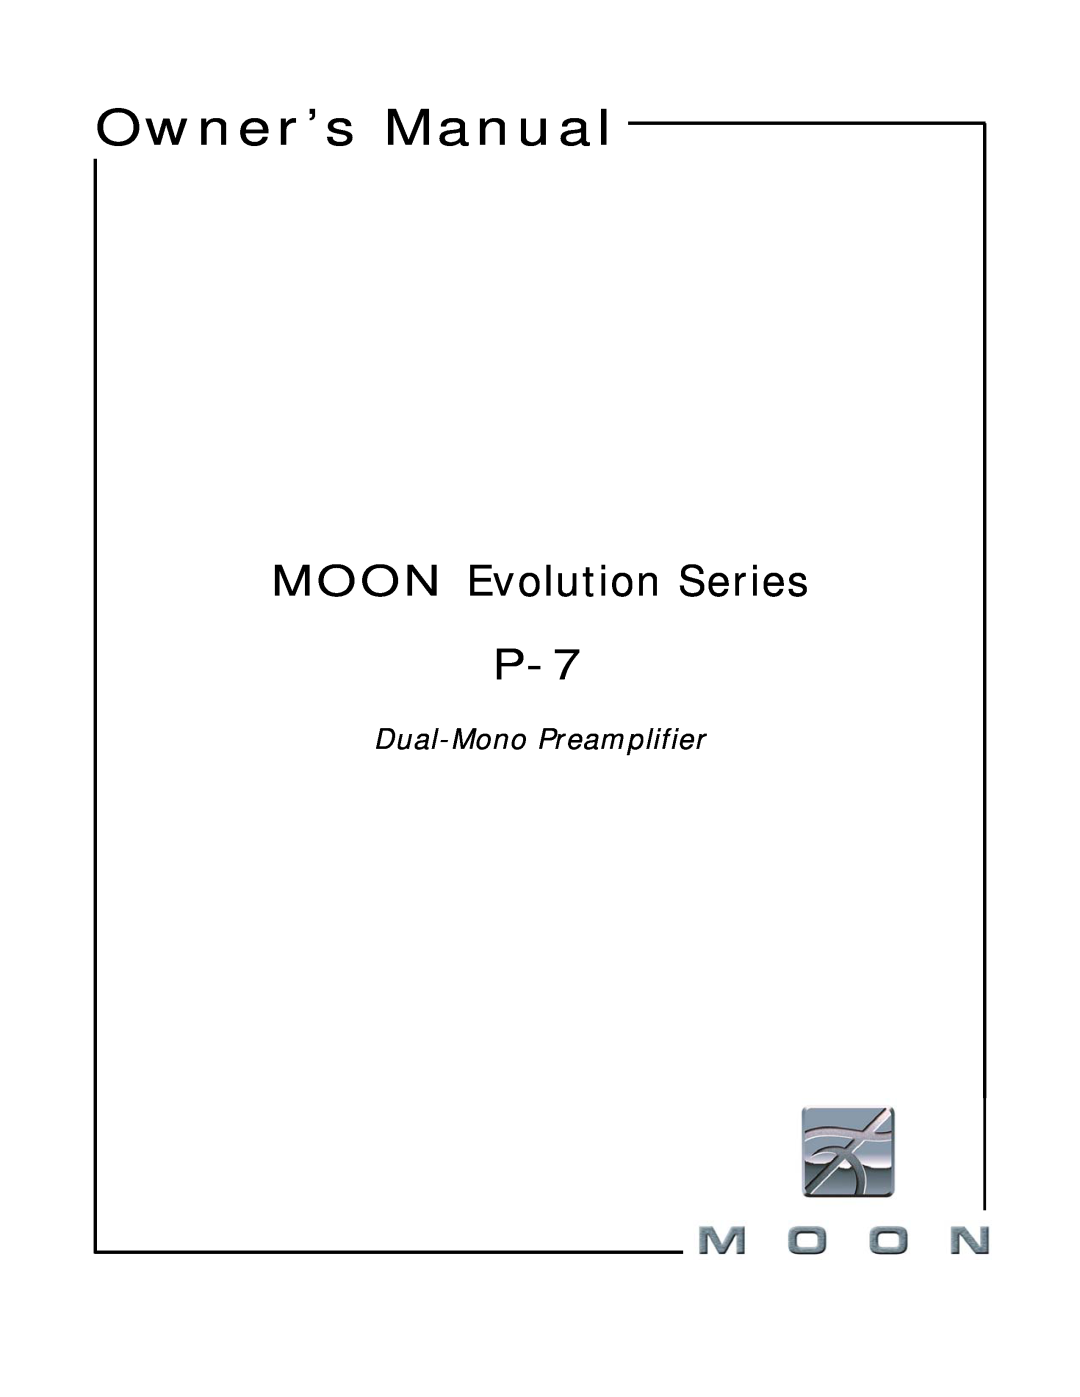 Simaudio owner manual MOON Evolution Series P-7, Dual-MonoPreamplifier 